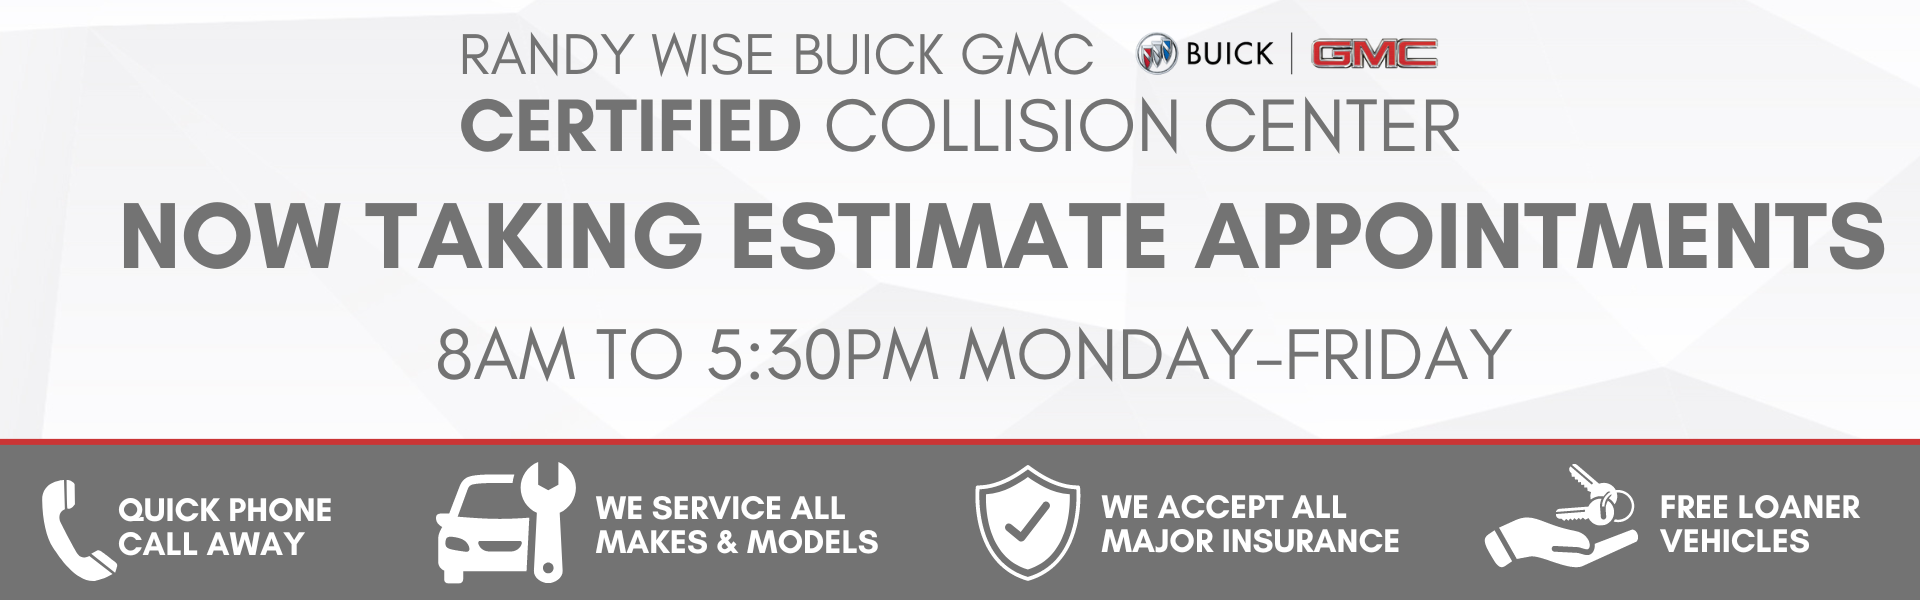 Buick GMC Collision Center